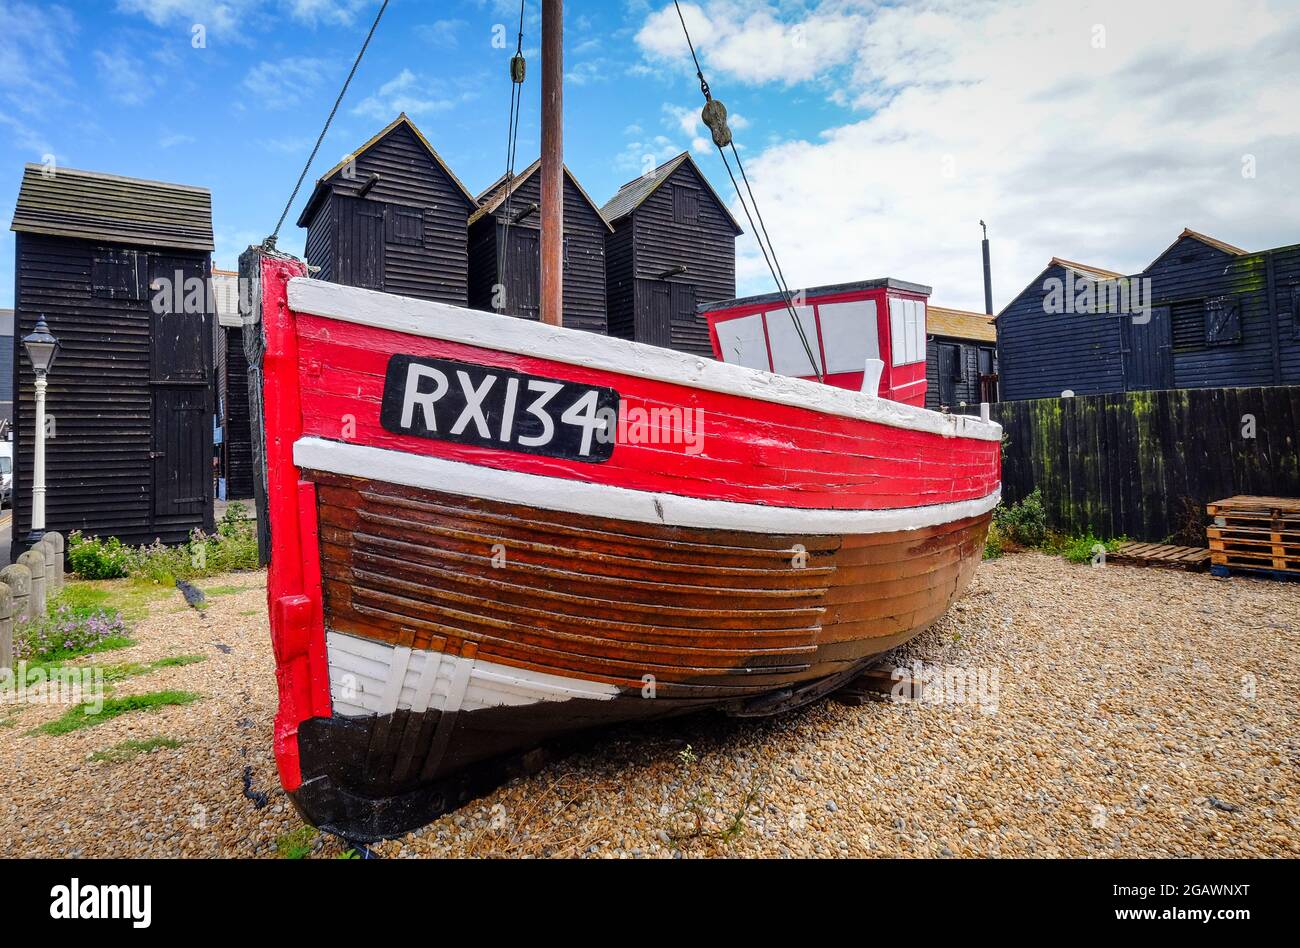 Historisches Fischerboot und Fischermänner-Netzhäuser, Hastlings Old Town, Hastlings, East Sussex, Großbritannien Stockfoto